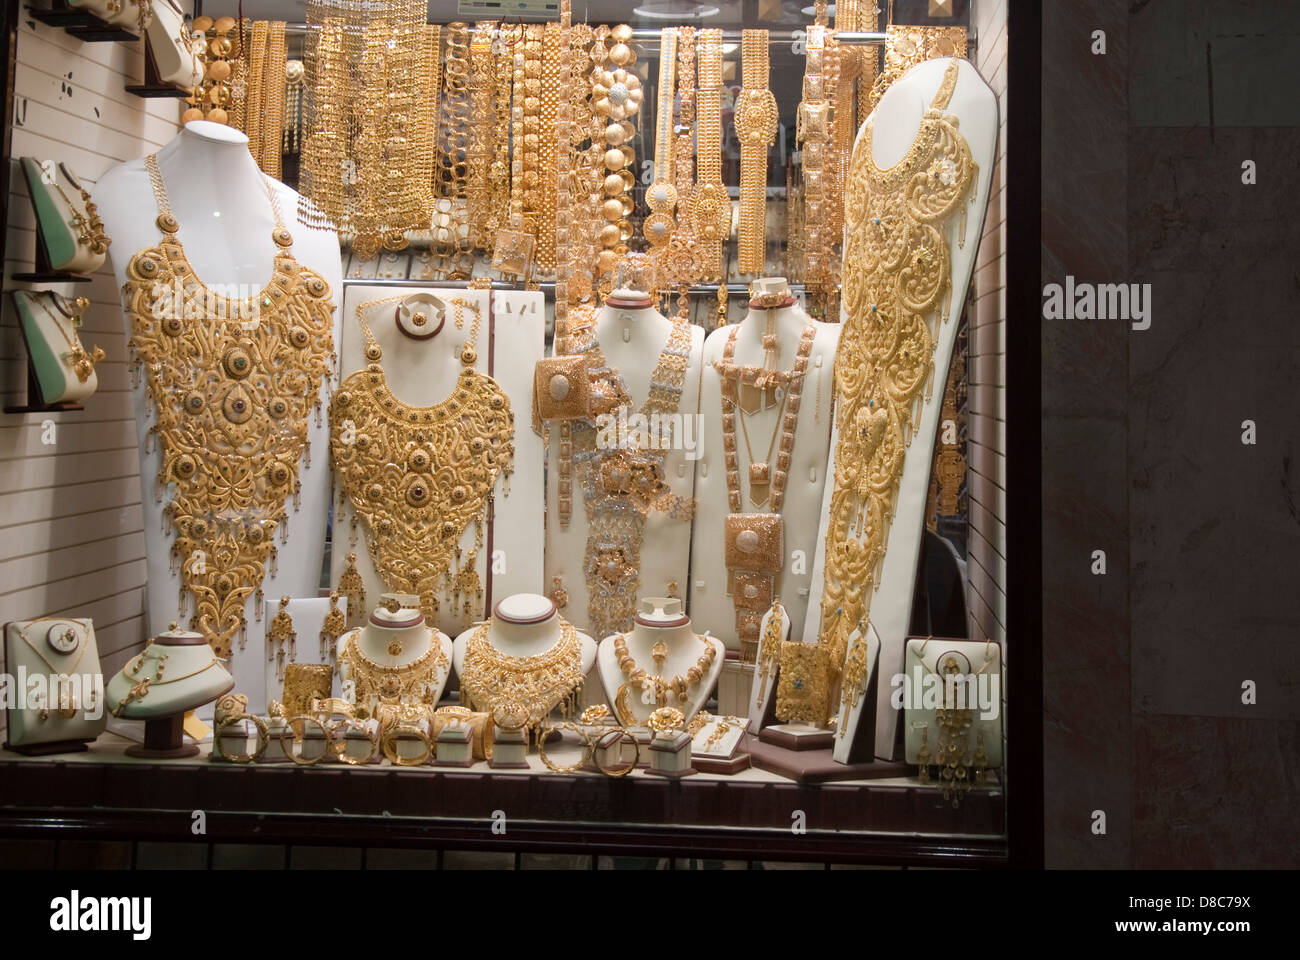 Arabische Gold Juweliere kaufen Dubai City of Gold Stockfotografie - Alamy